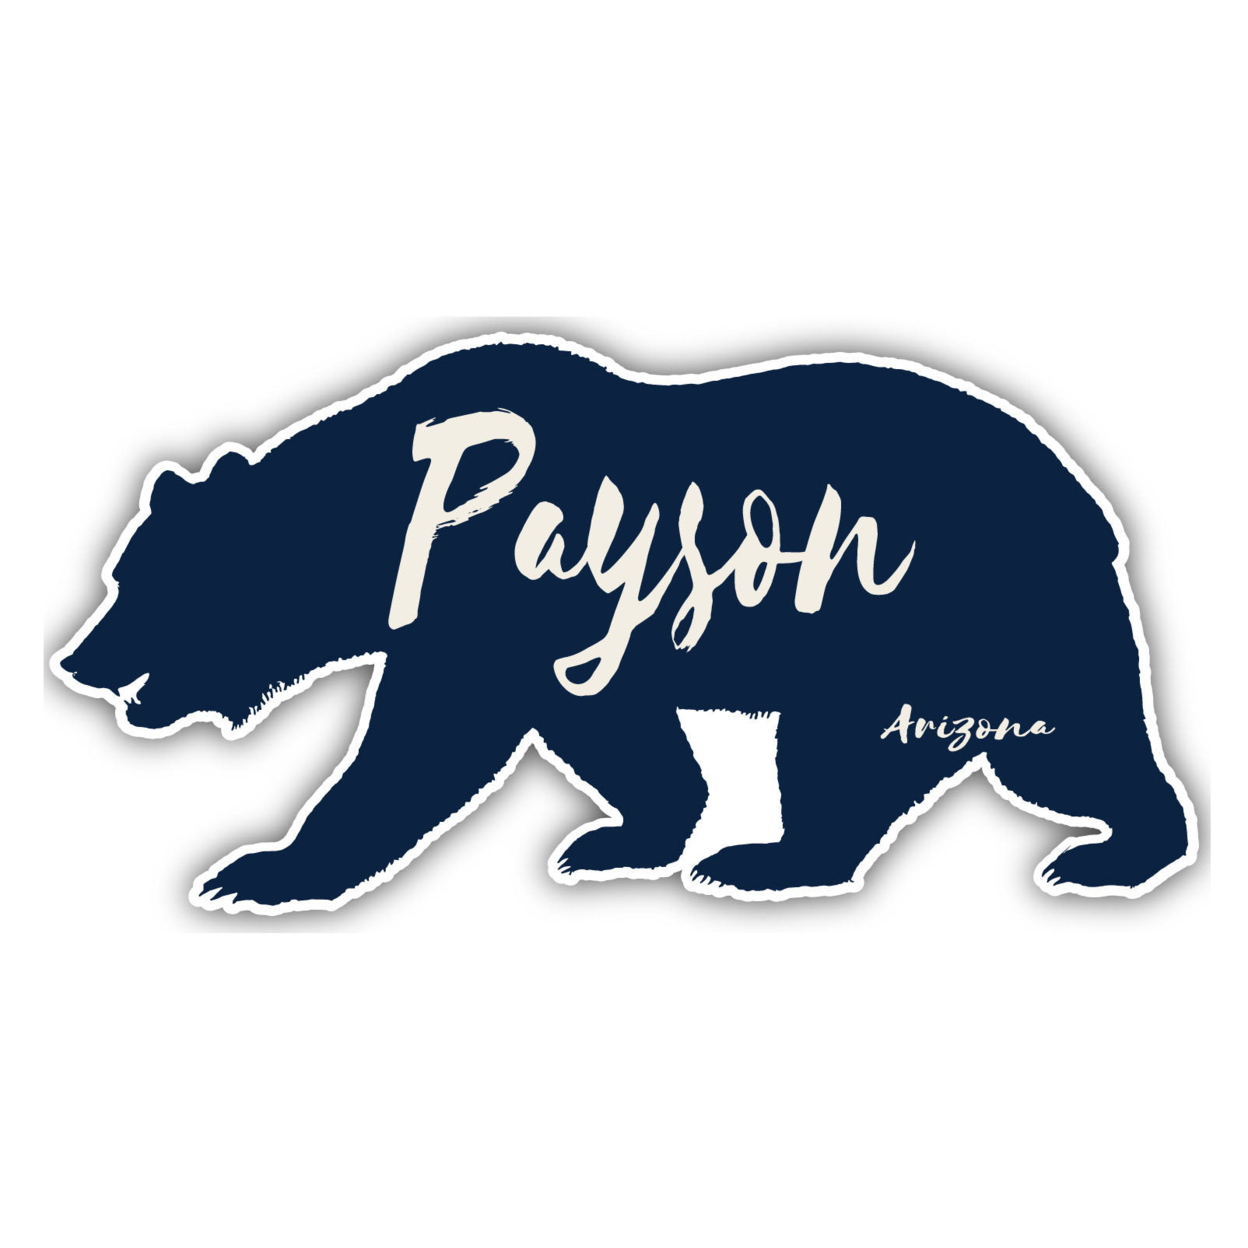 Payson Arizona Souvenir Decorative Stickers (Choose Theme And Size) - Single Unit, 2-Inch, Bear